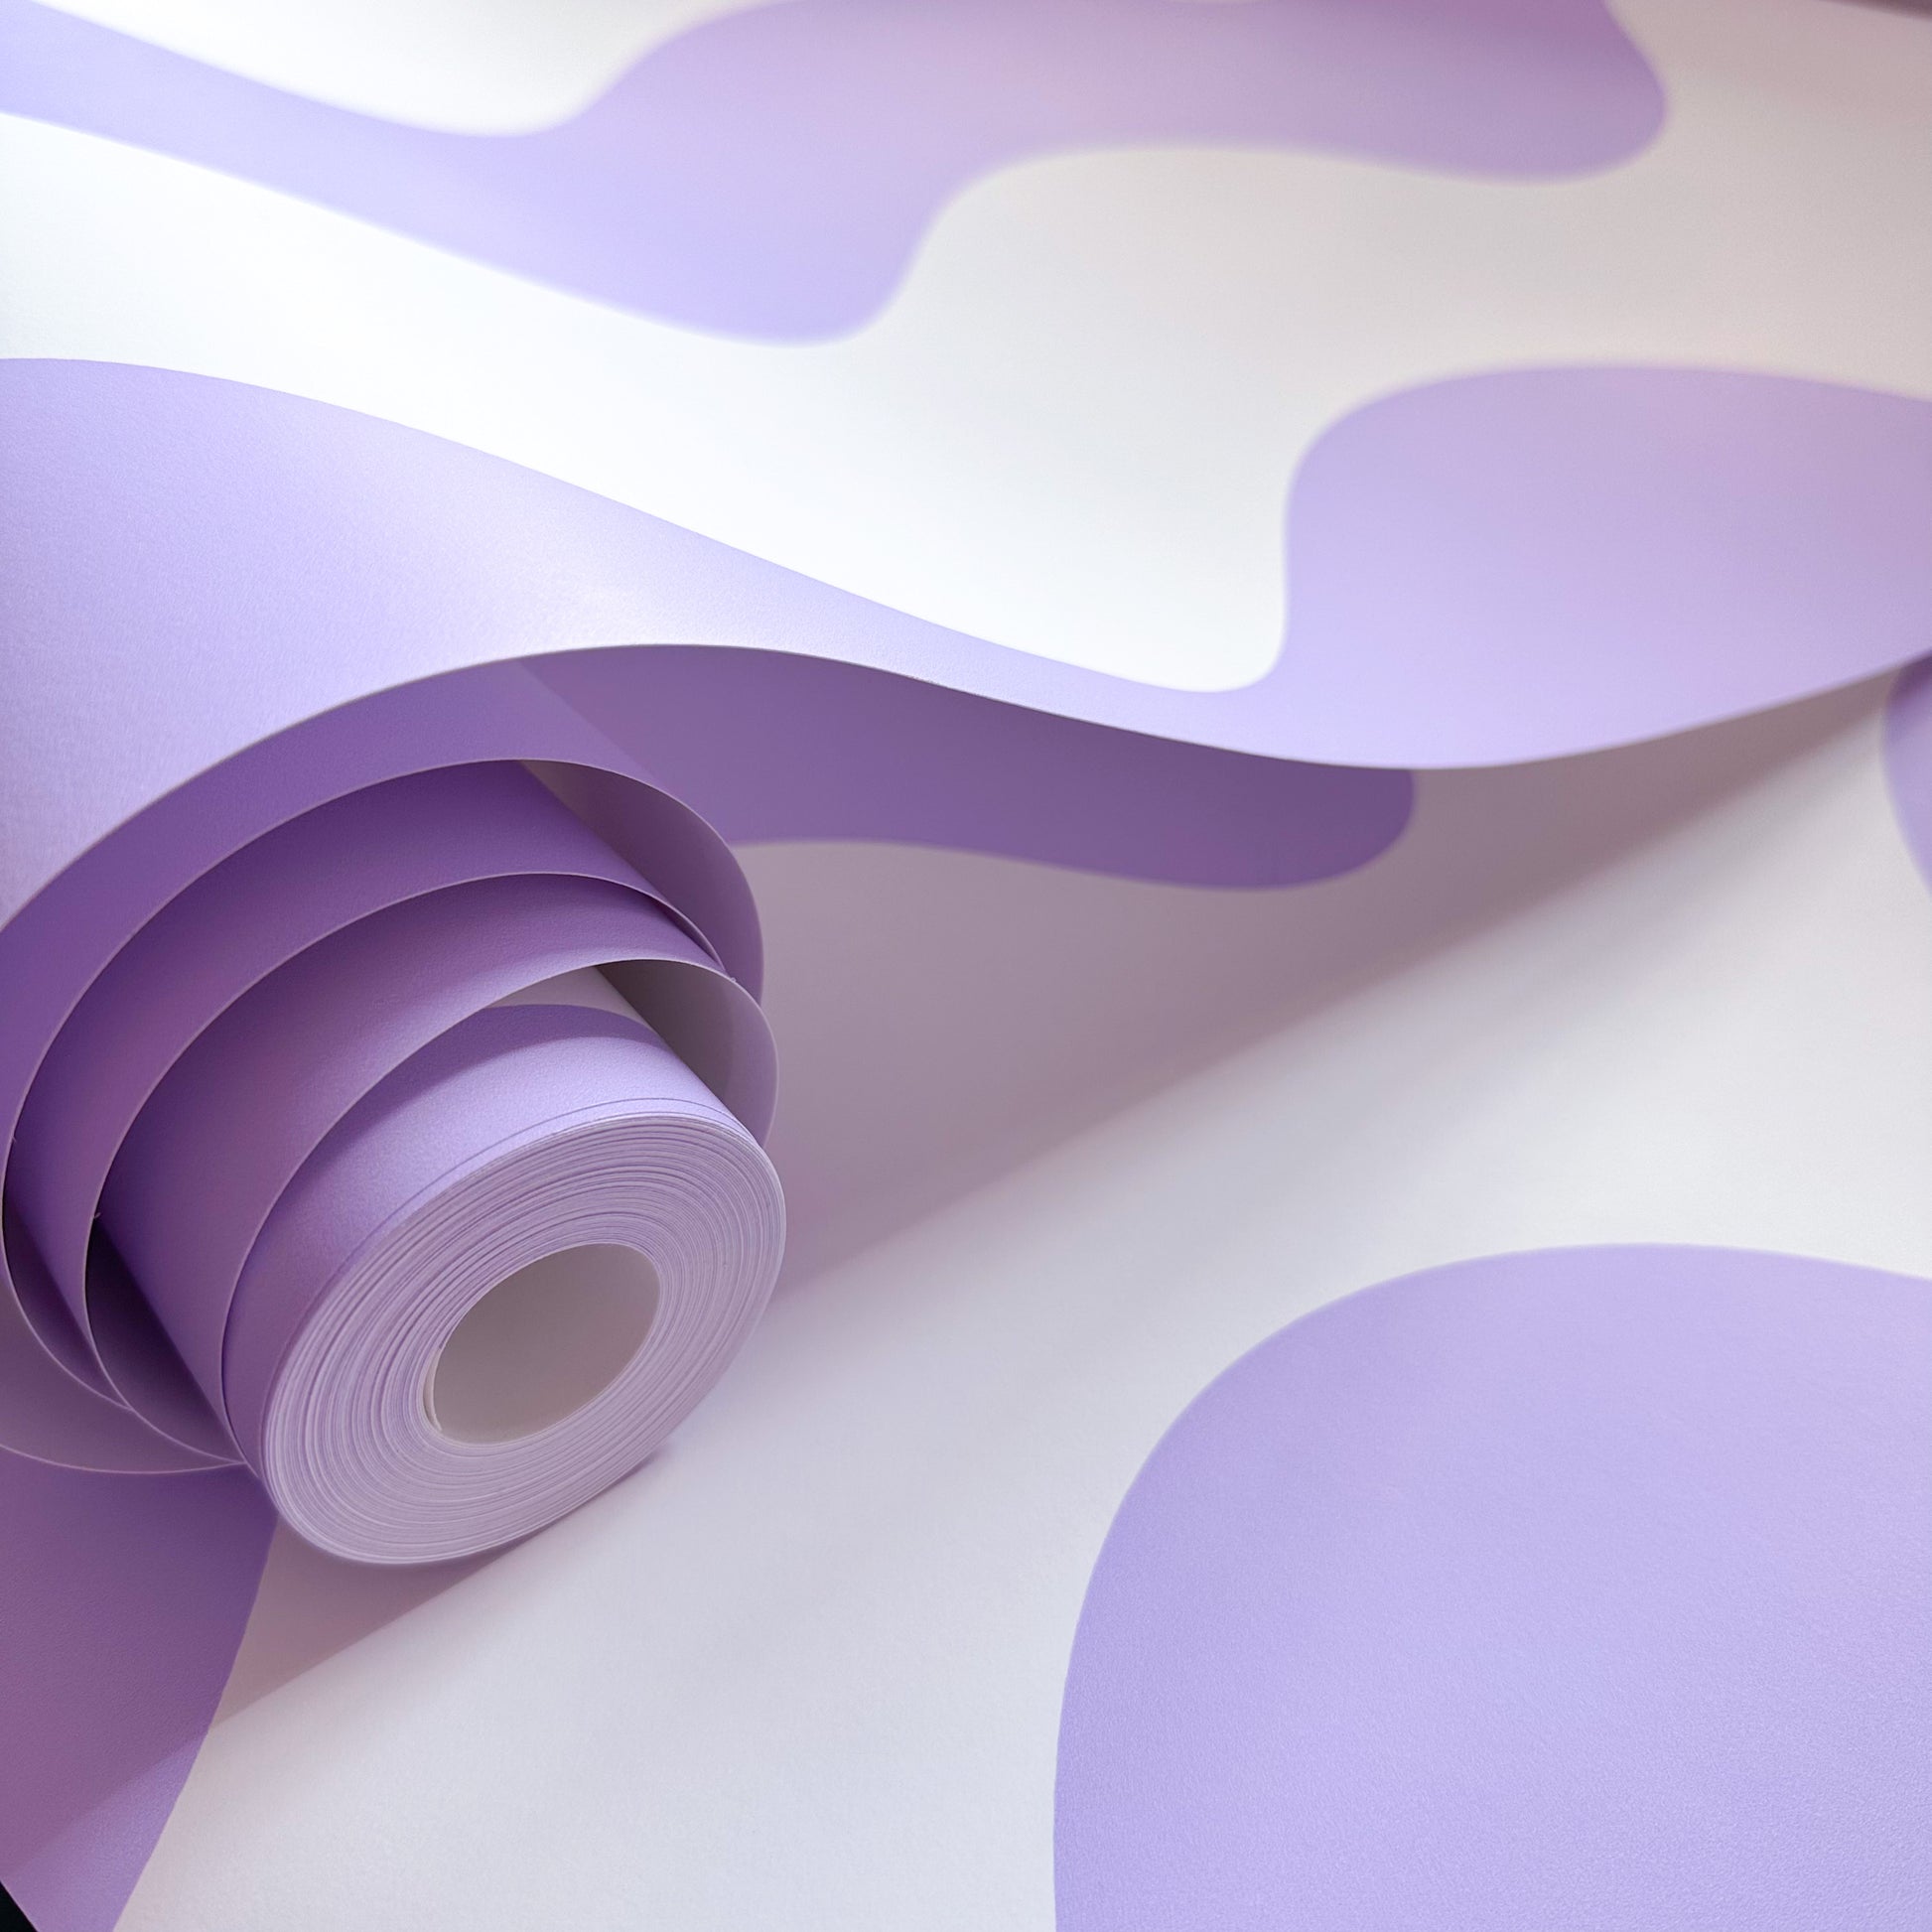 soft purple wiggle wallpaper uk for bedroom walls